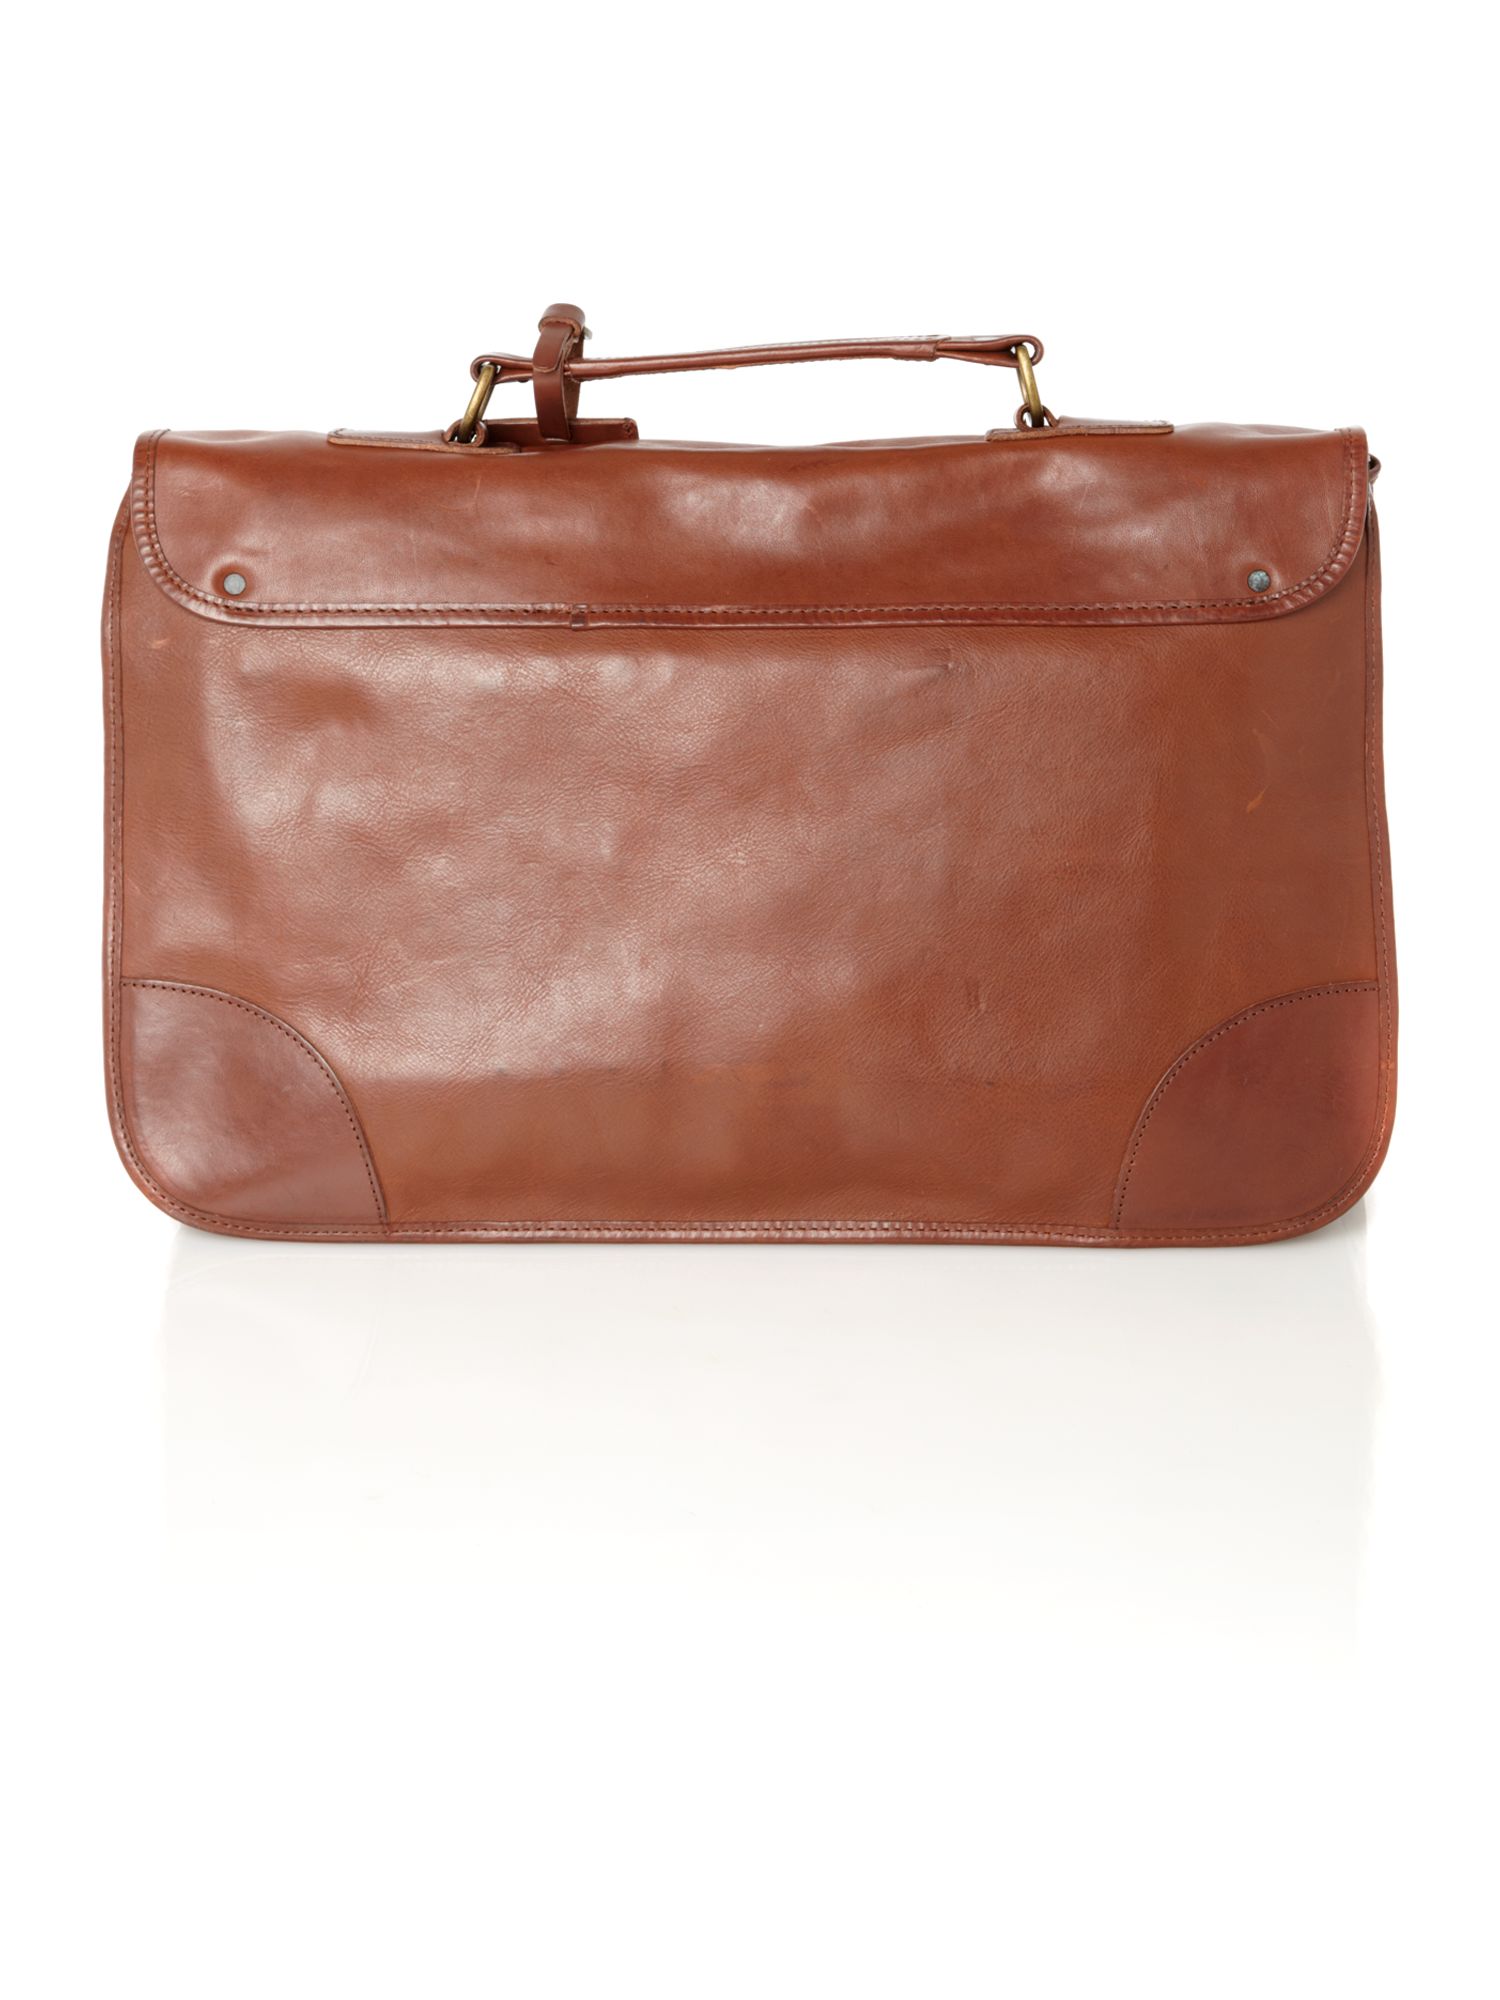 Polo ralph lauren Leather Messenger Bag in Brown for Men | Lyst